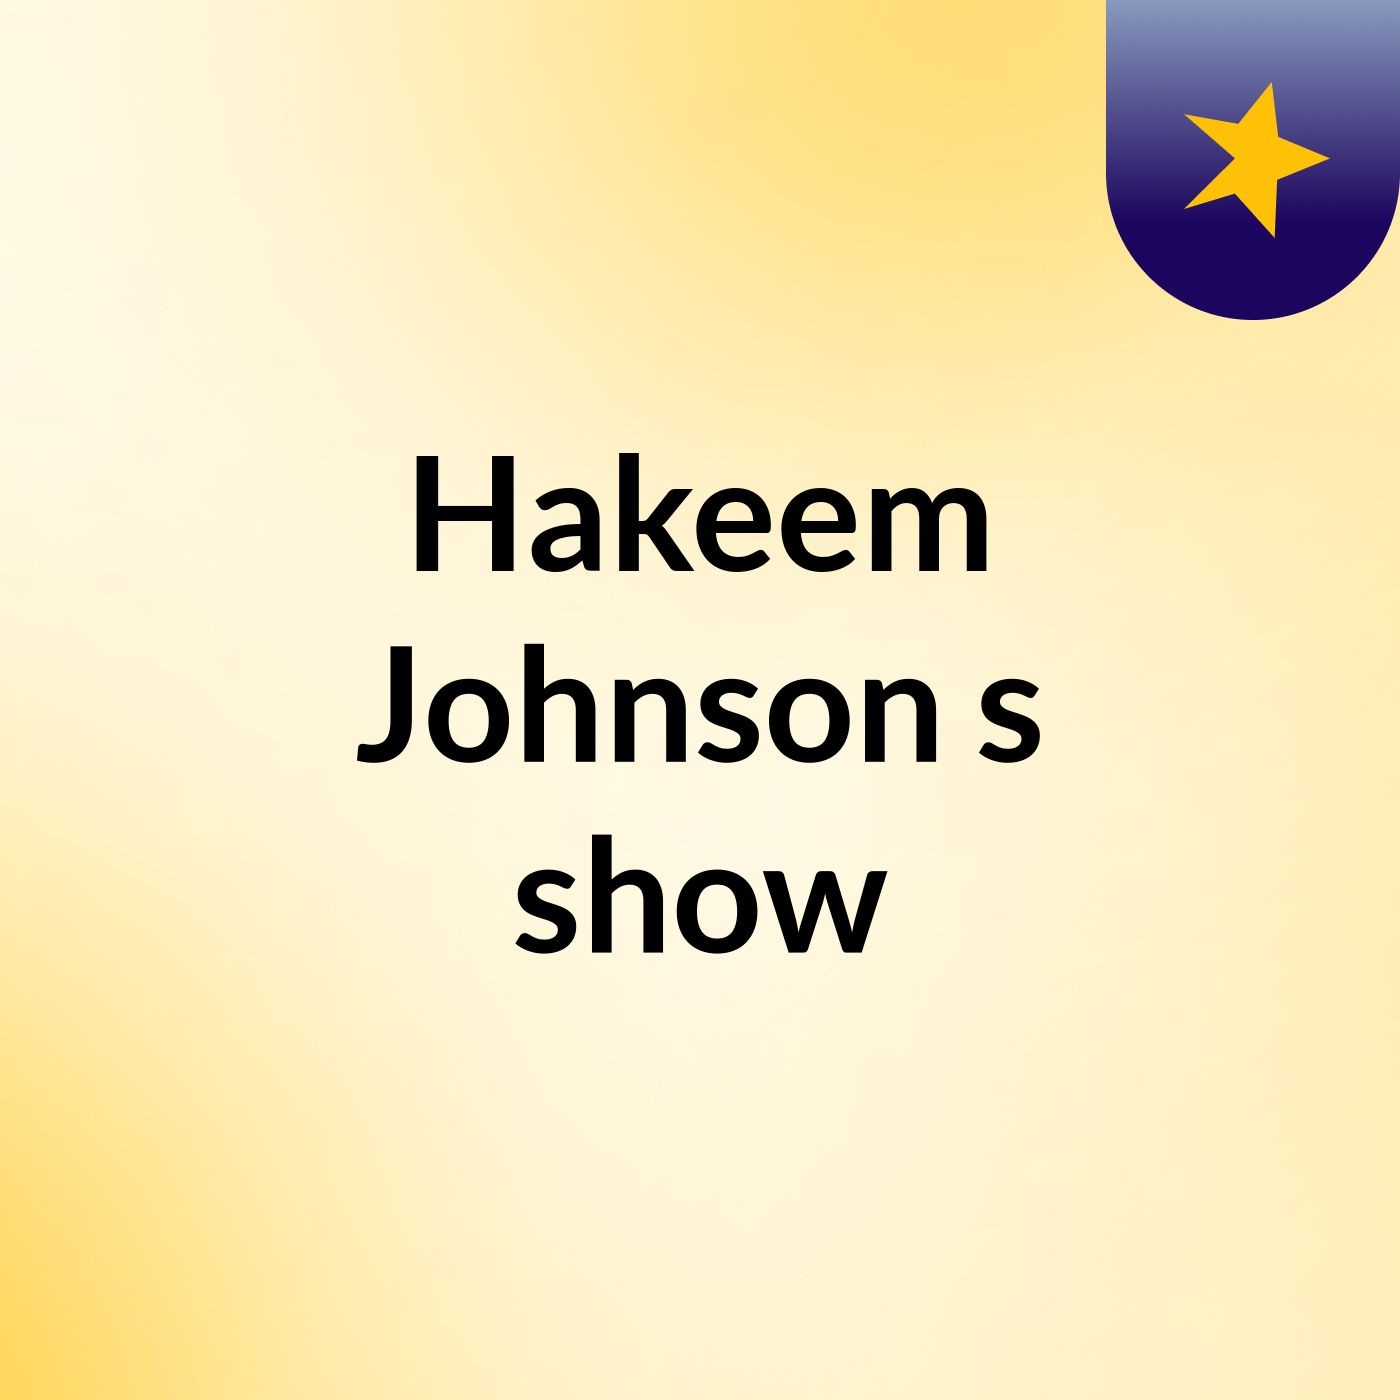 Hakeem Johnson's show